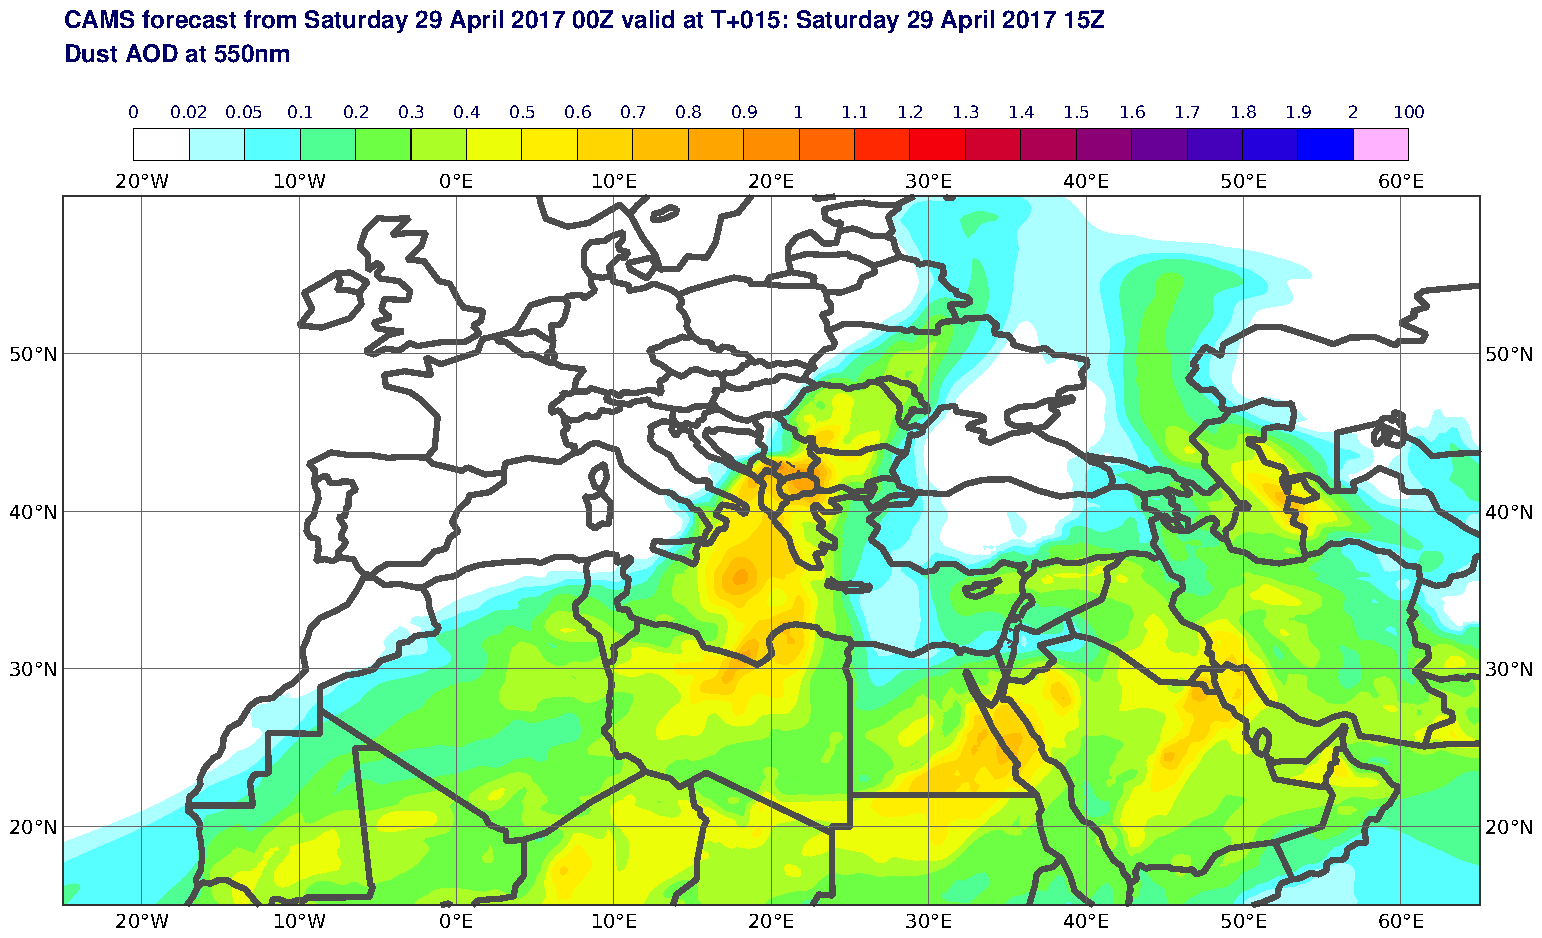 Dust AOD at 550nm valid at T15 - 2017-04-29 15:00